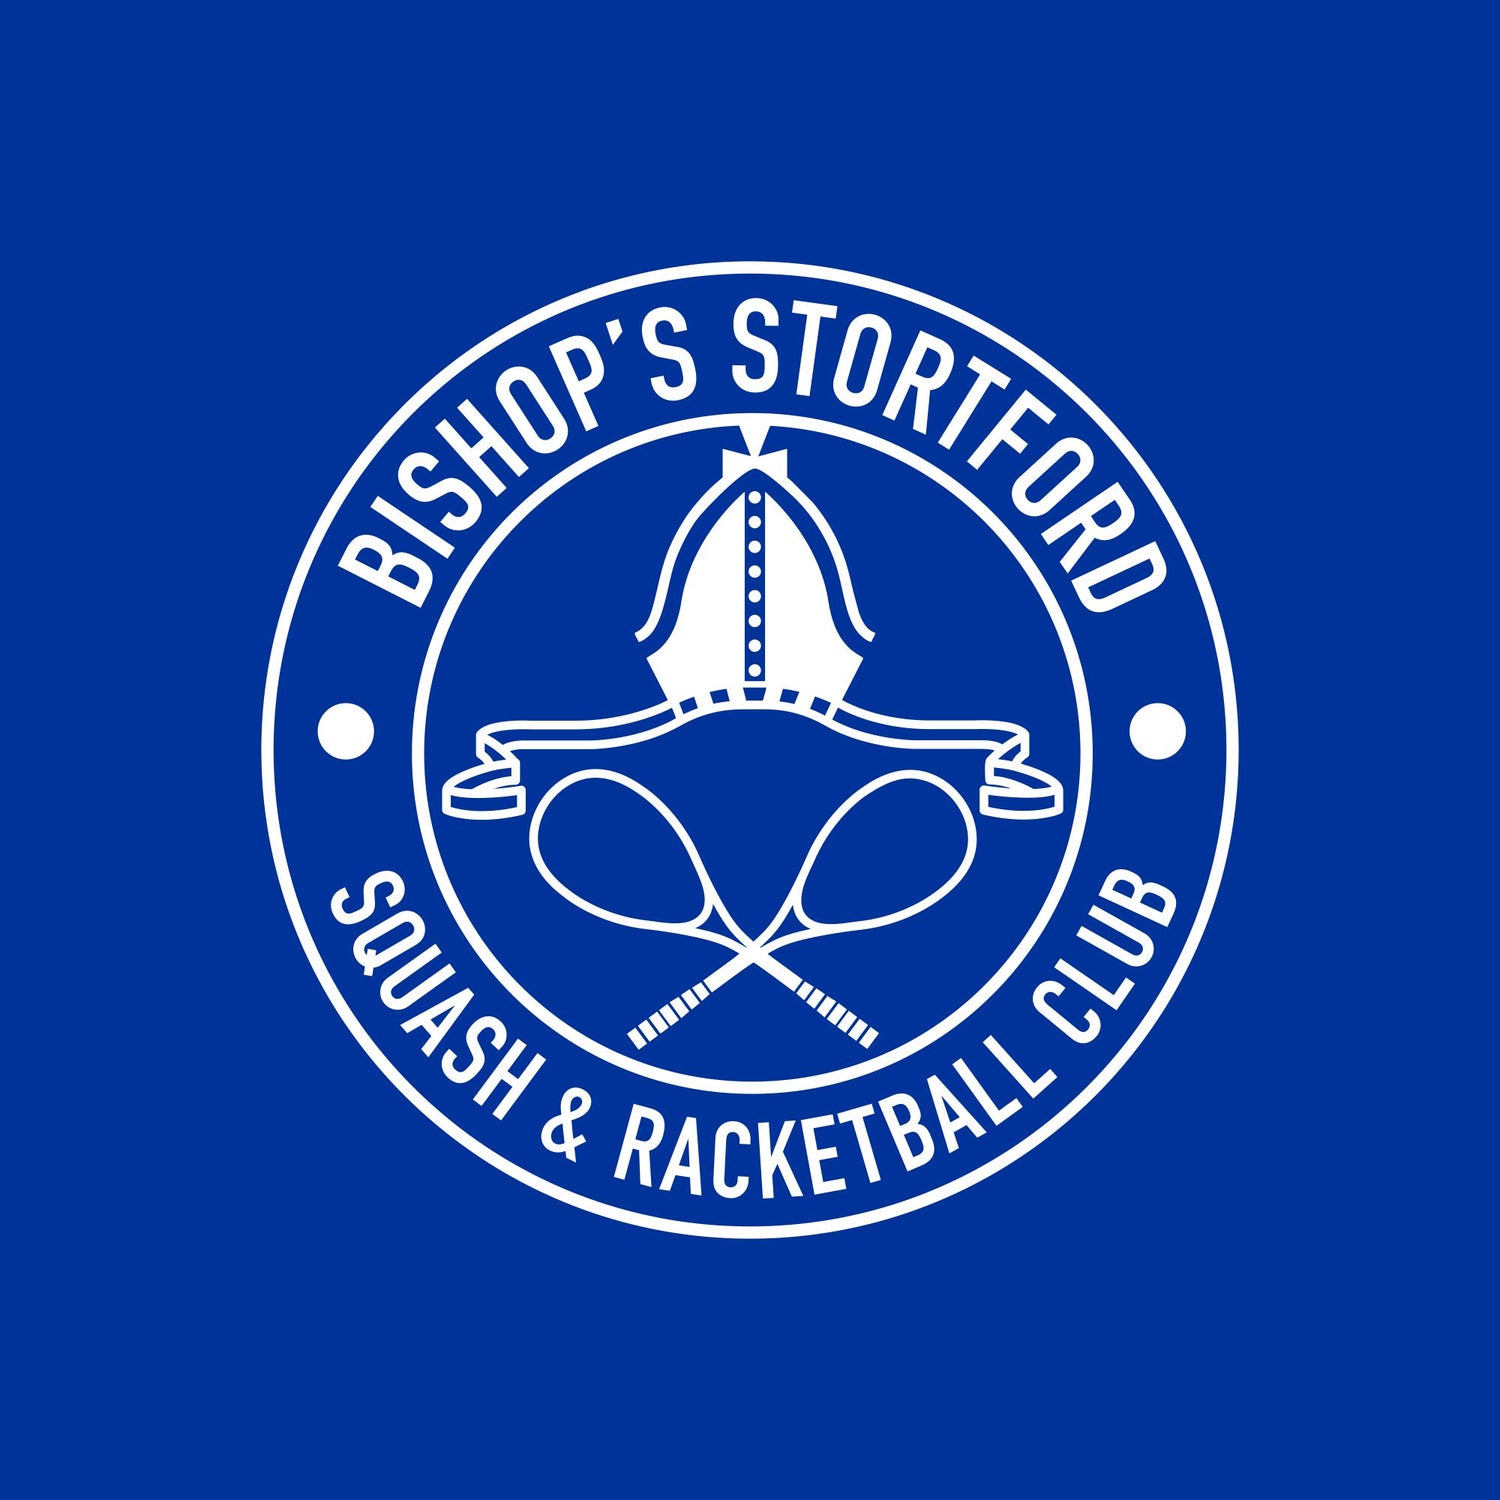 Bishop's Stortford Squash